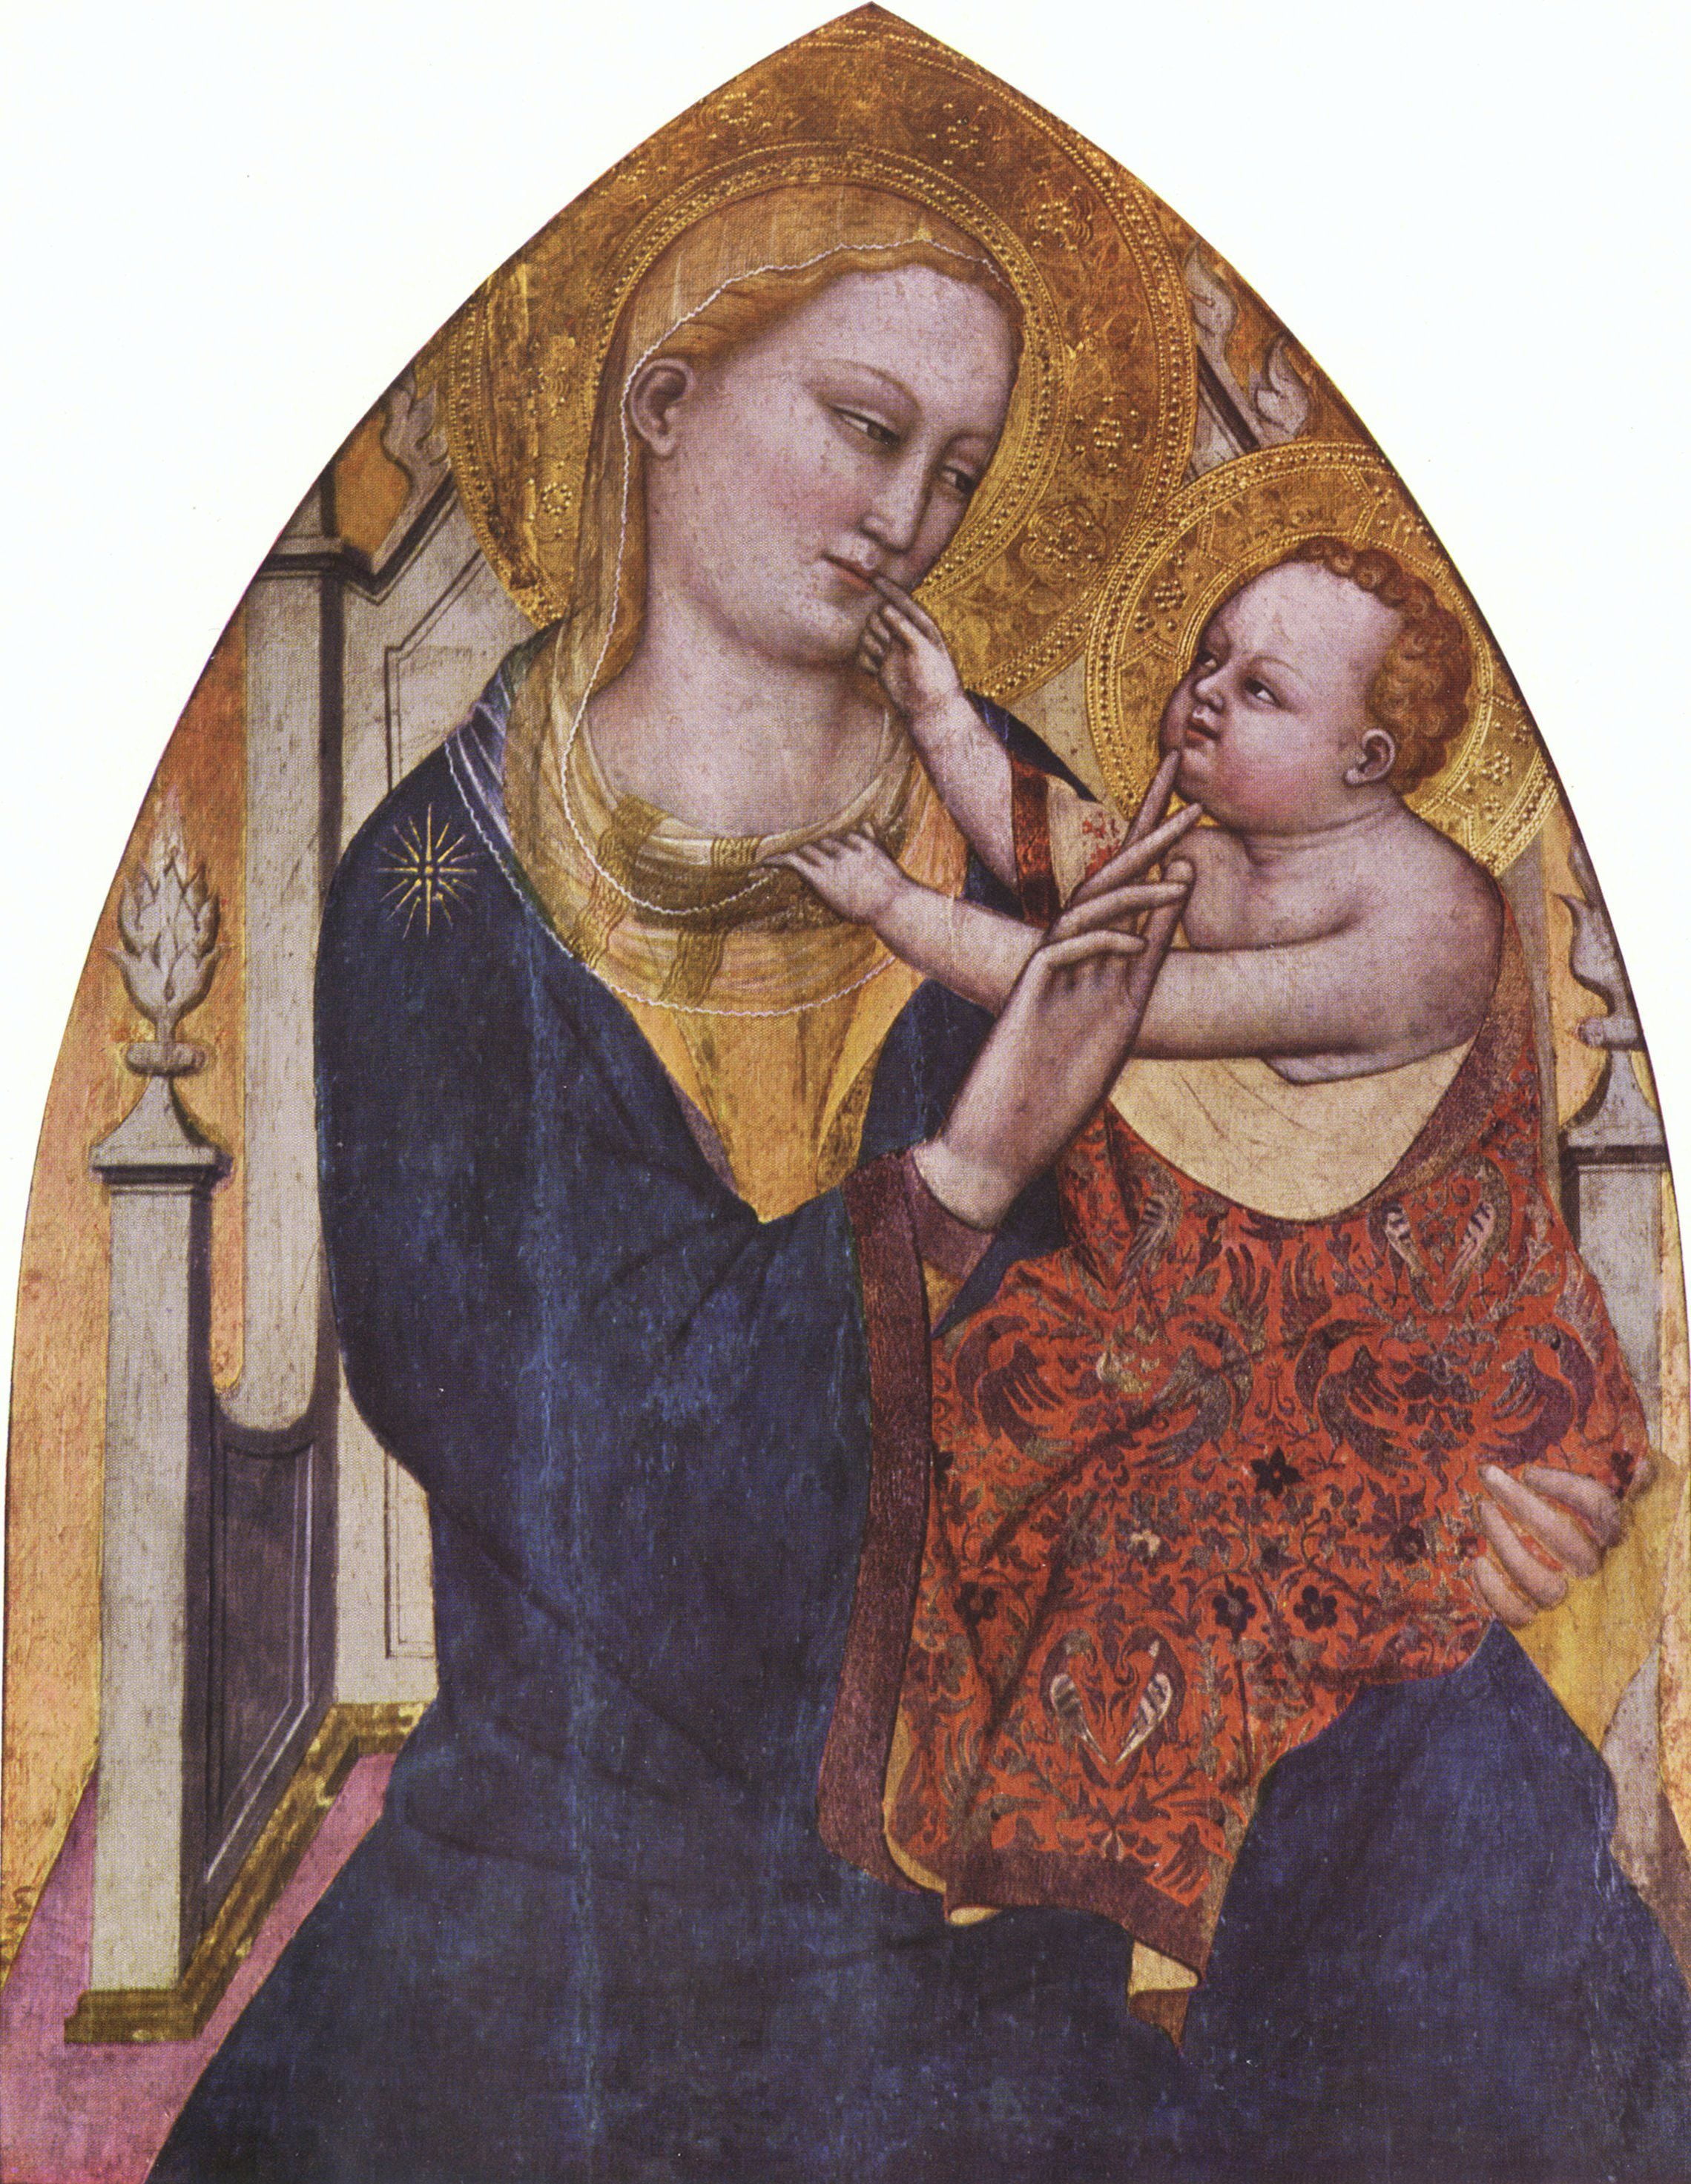 Автор картины мадонна с младенцем на троне. Мадонна с младенцем 14 век. Мадонна 13-14 век. Мадонна 17 век.